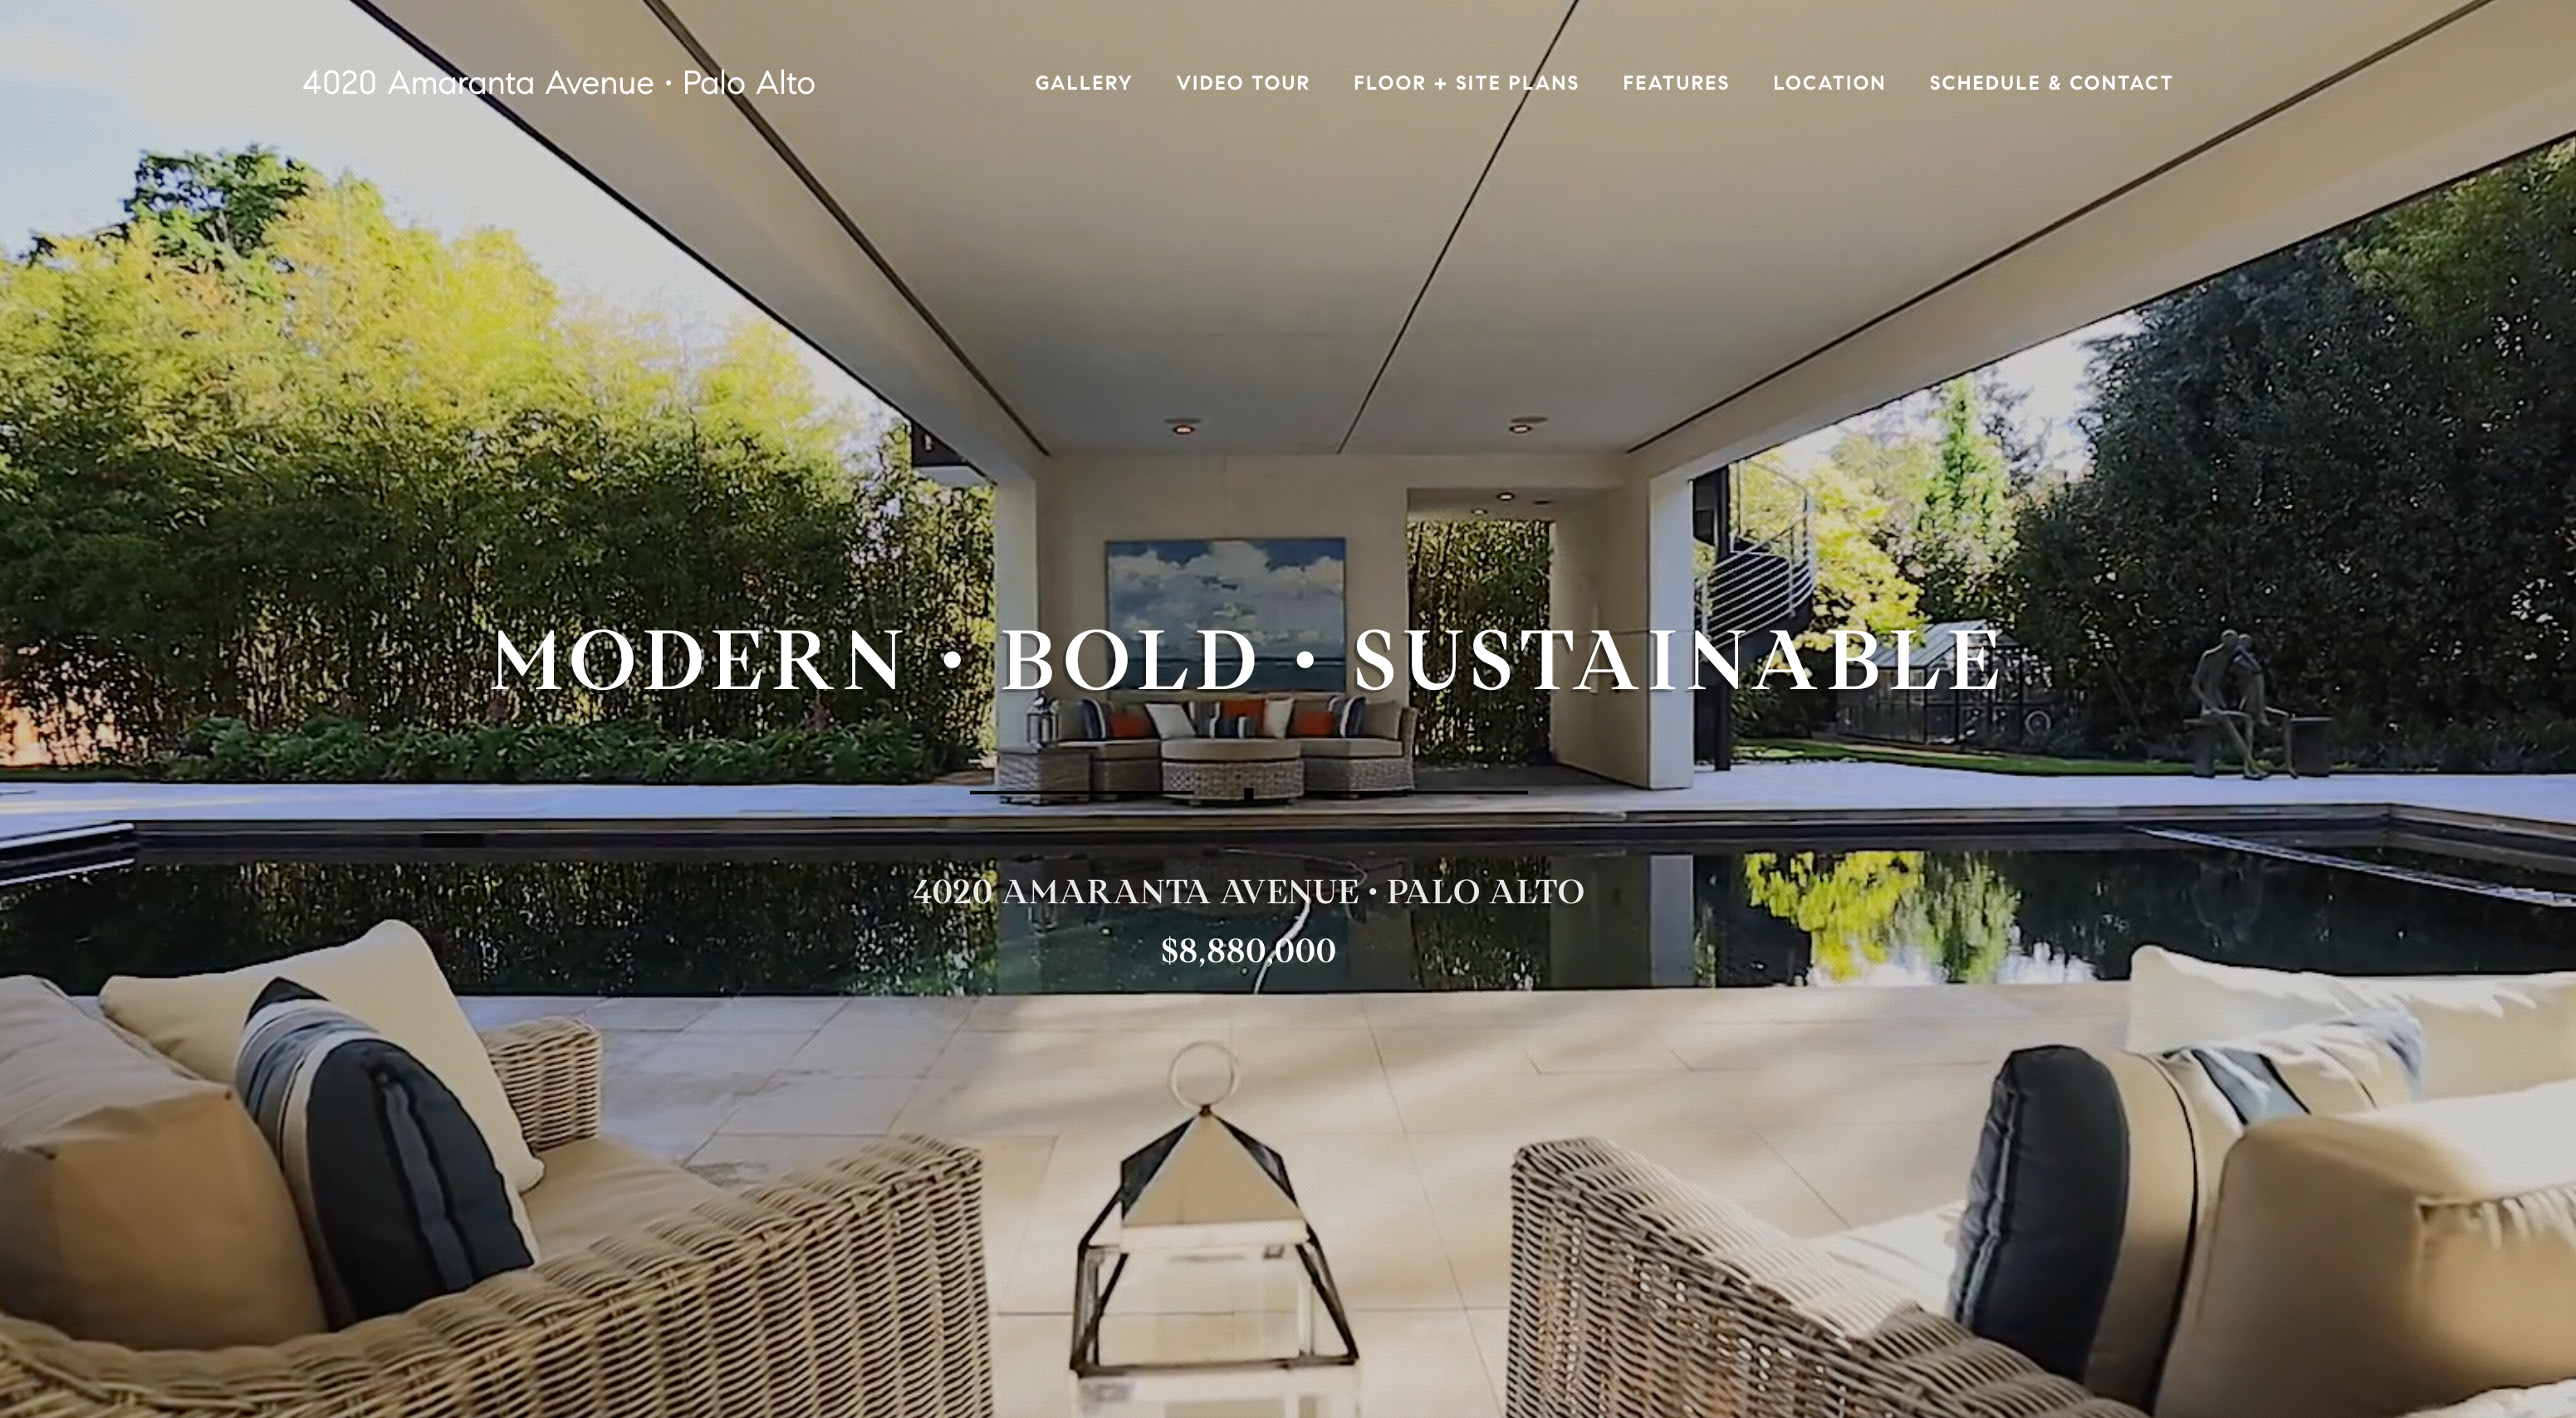 4020 Amaranta Avenue in Palo Alto, a modern, bold, sustainable home. List Price $8,880,000